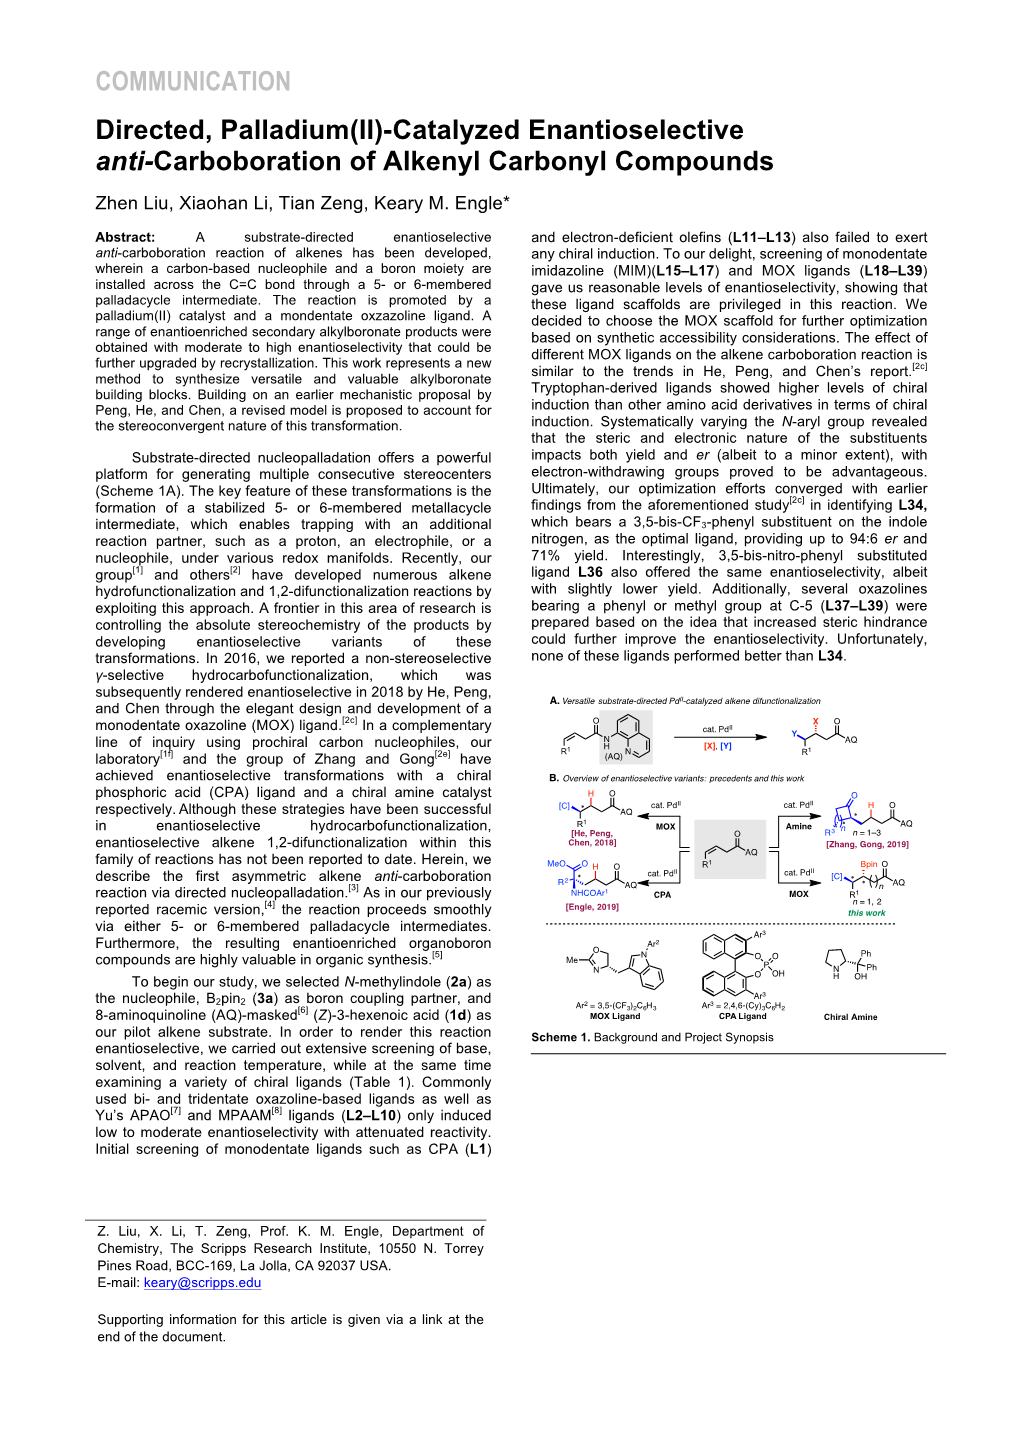 Catalyzed Enantioselective Anti-Carboboration of Alkenyl Carbonyl Compounds